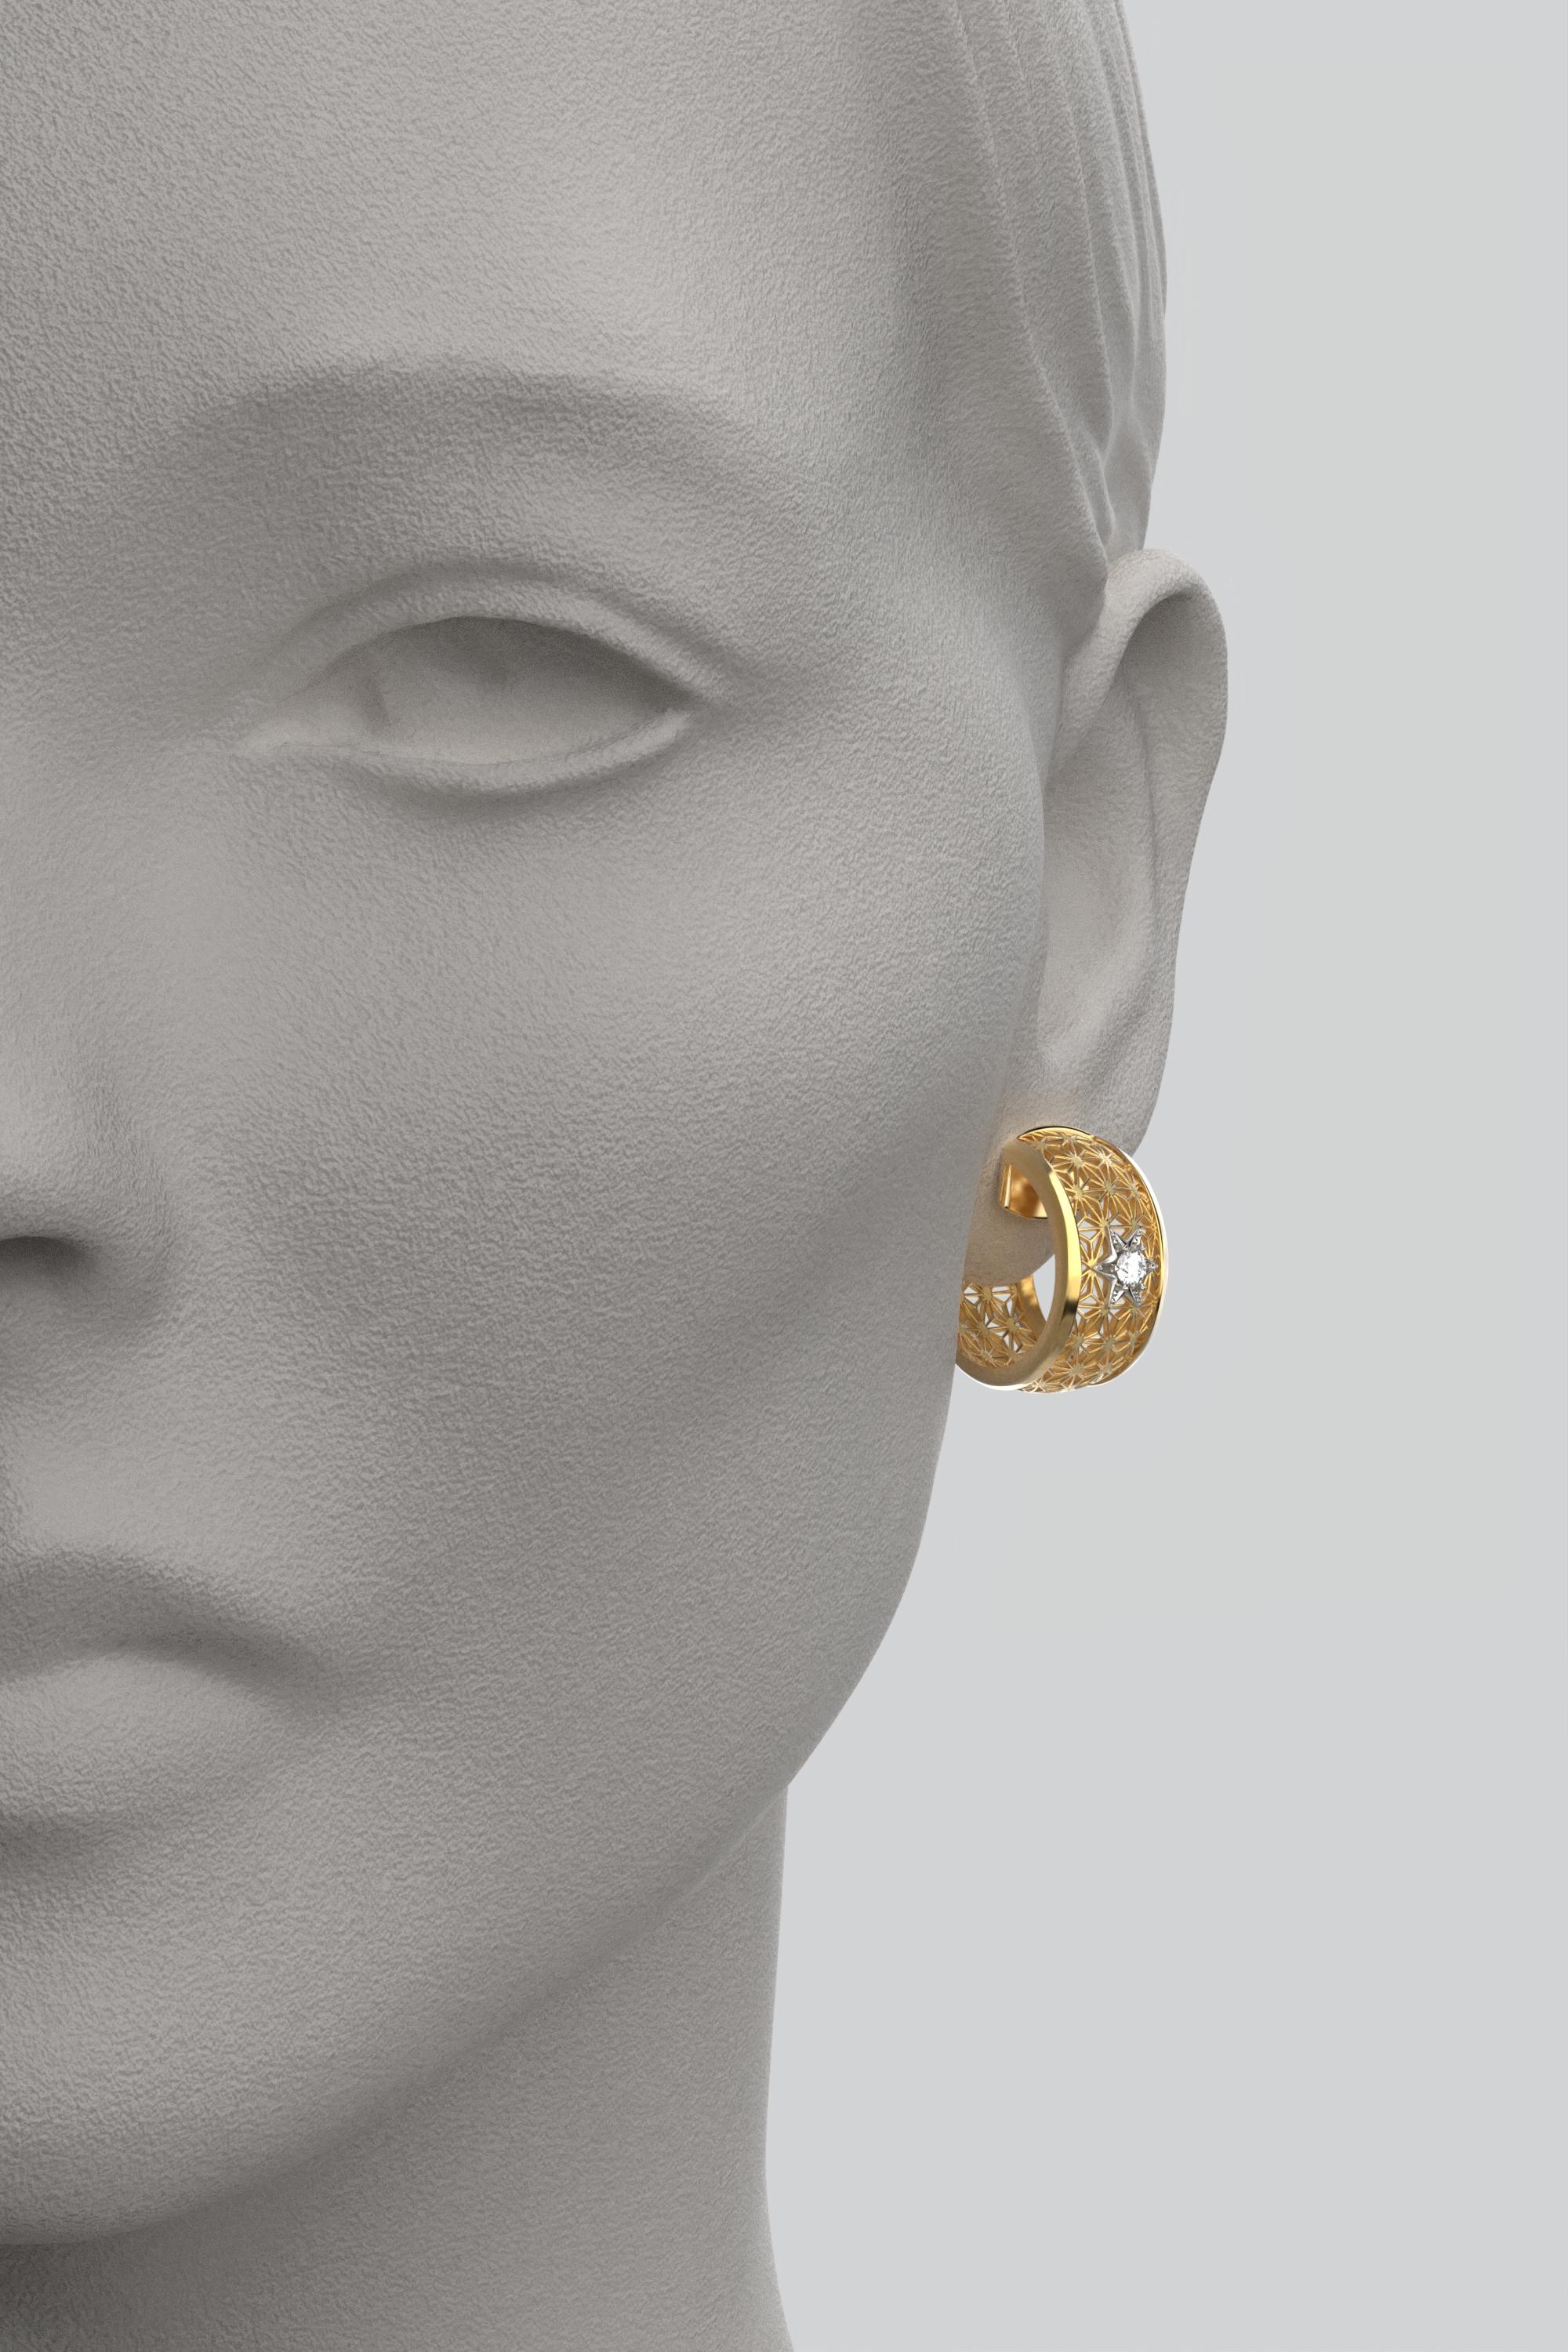 Women's Oltremare Gioielli Diamond Hoop Earrings 14k Gold Made in Italy, Sashiko Pattern For Sale